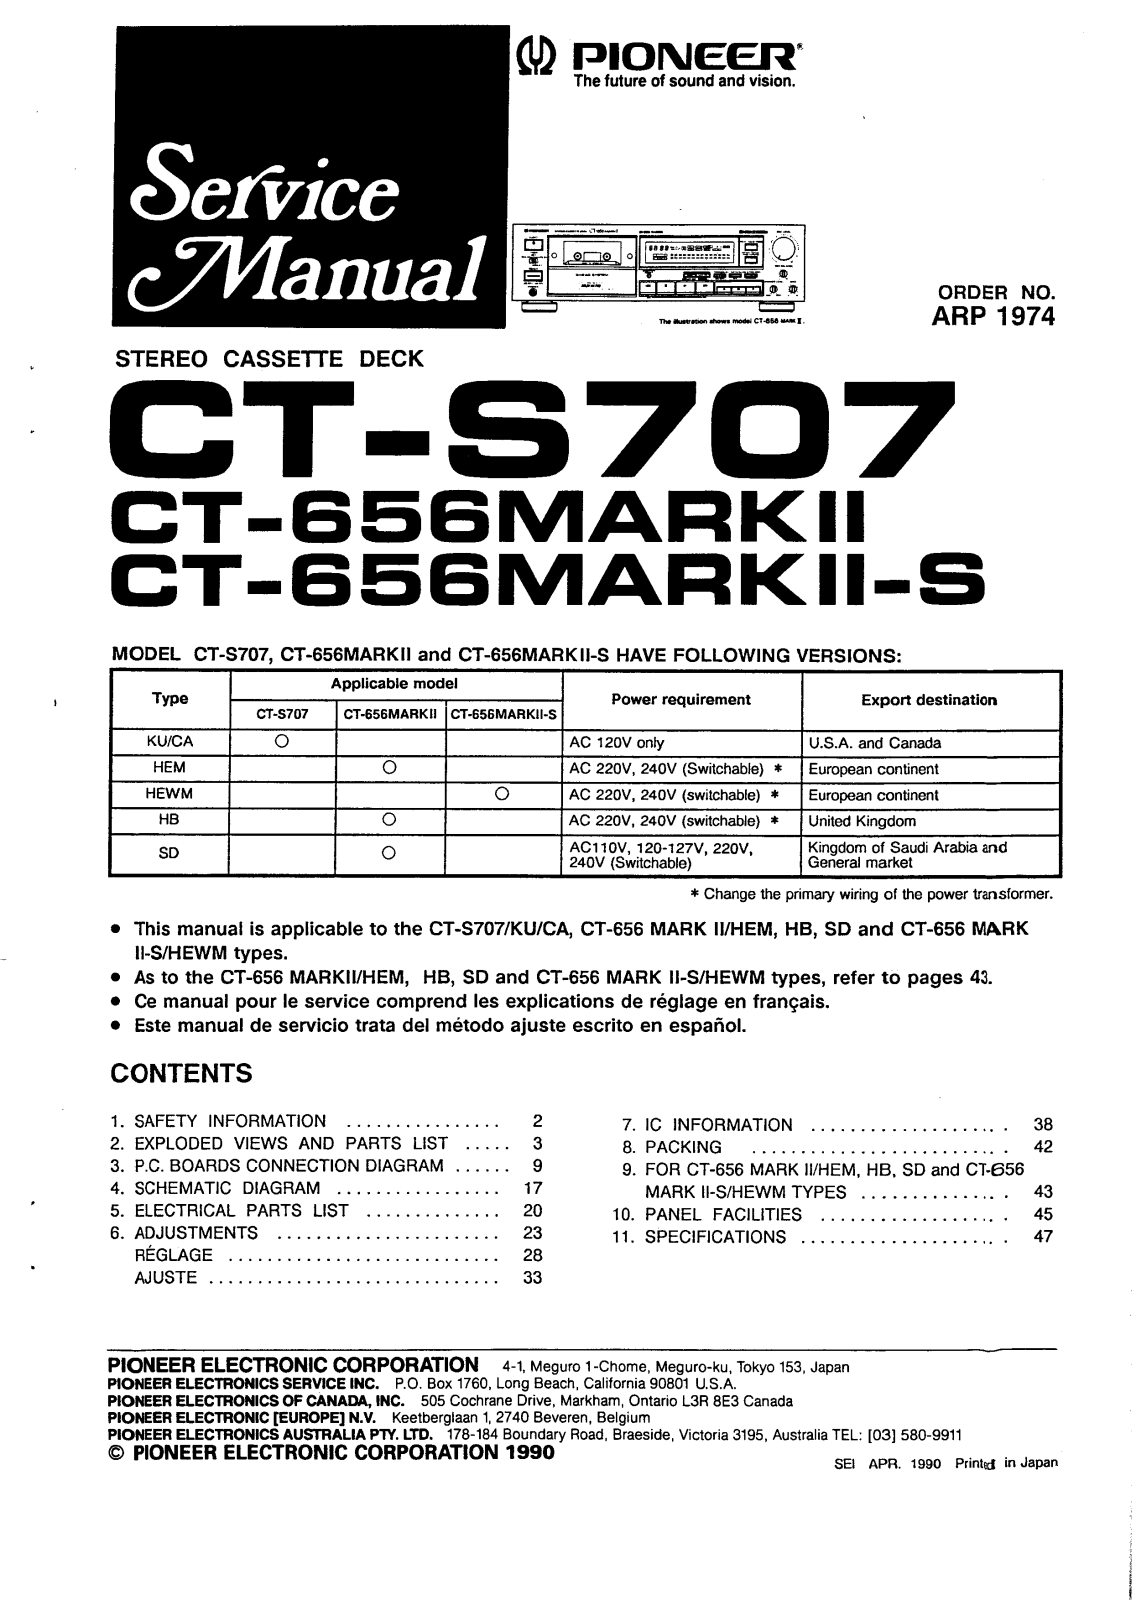 Pioneer CT-656 Mk2, CTS-707 Service manual